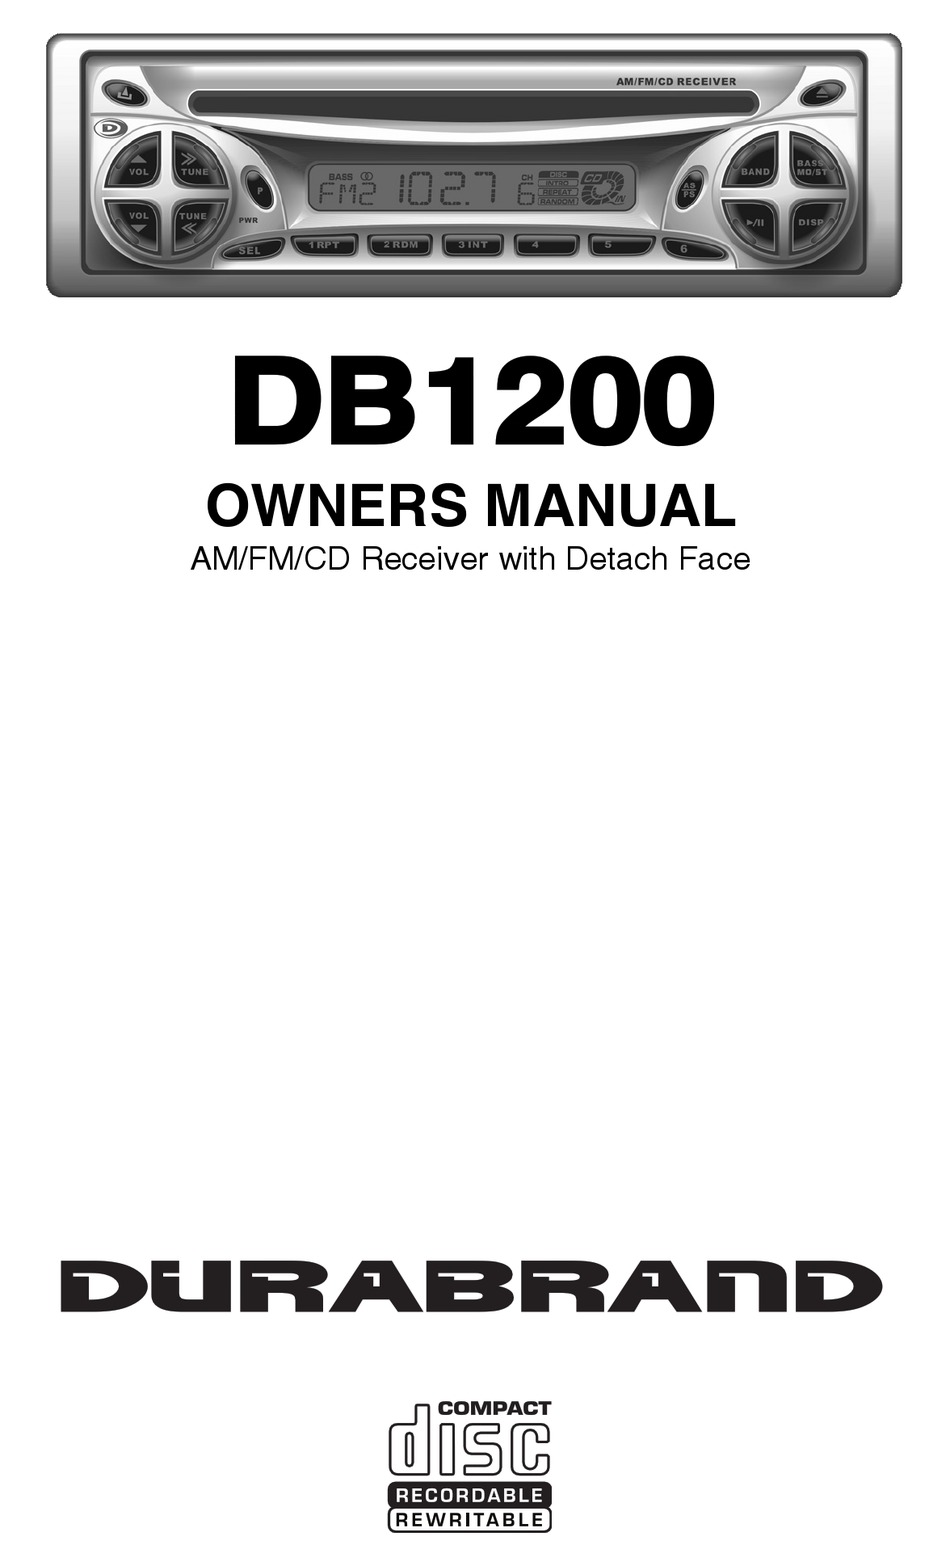 durabrand dct1481 manual